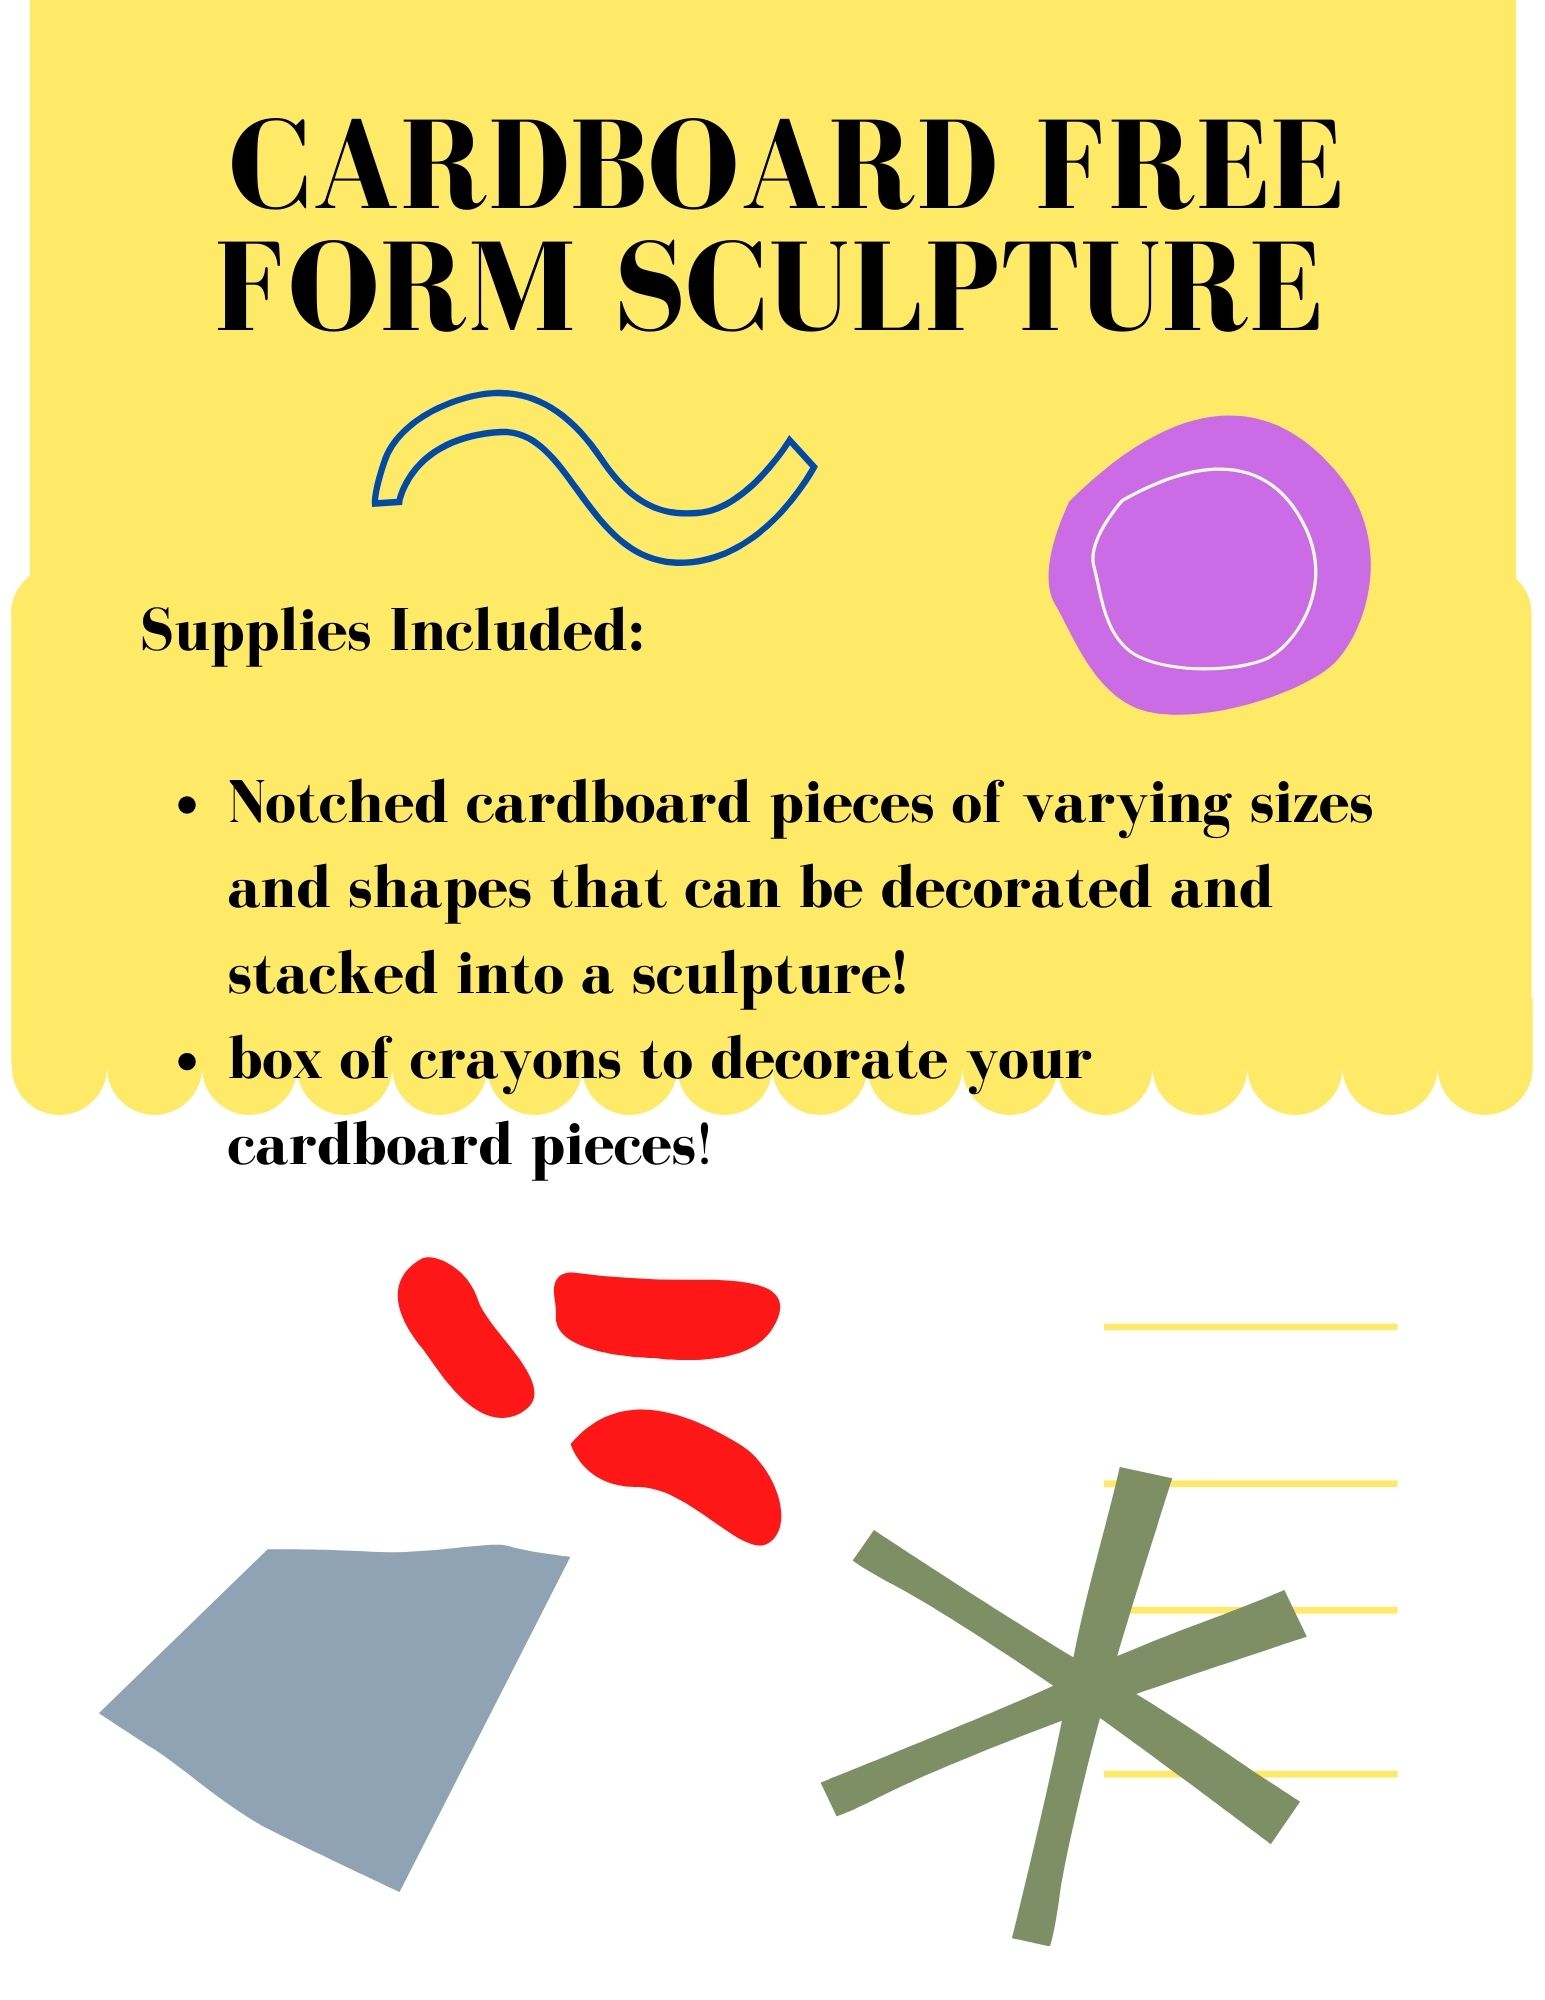 Cardboard Free Form Sculpture!